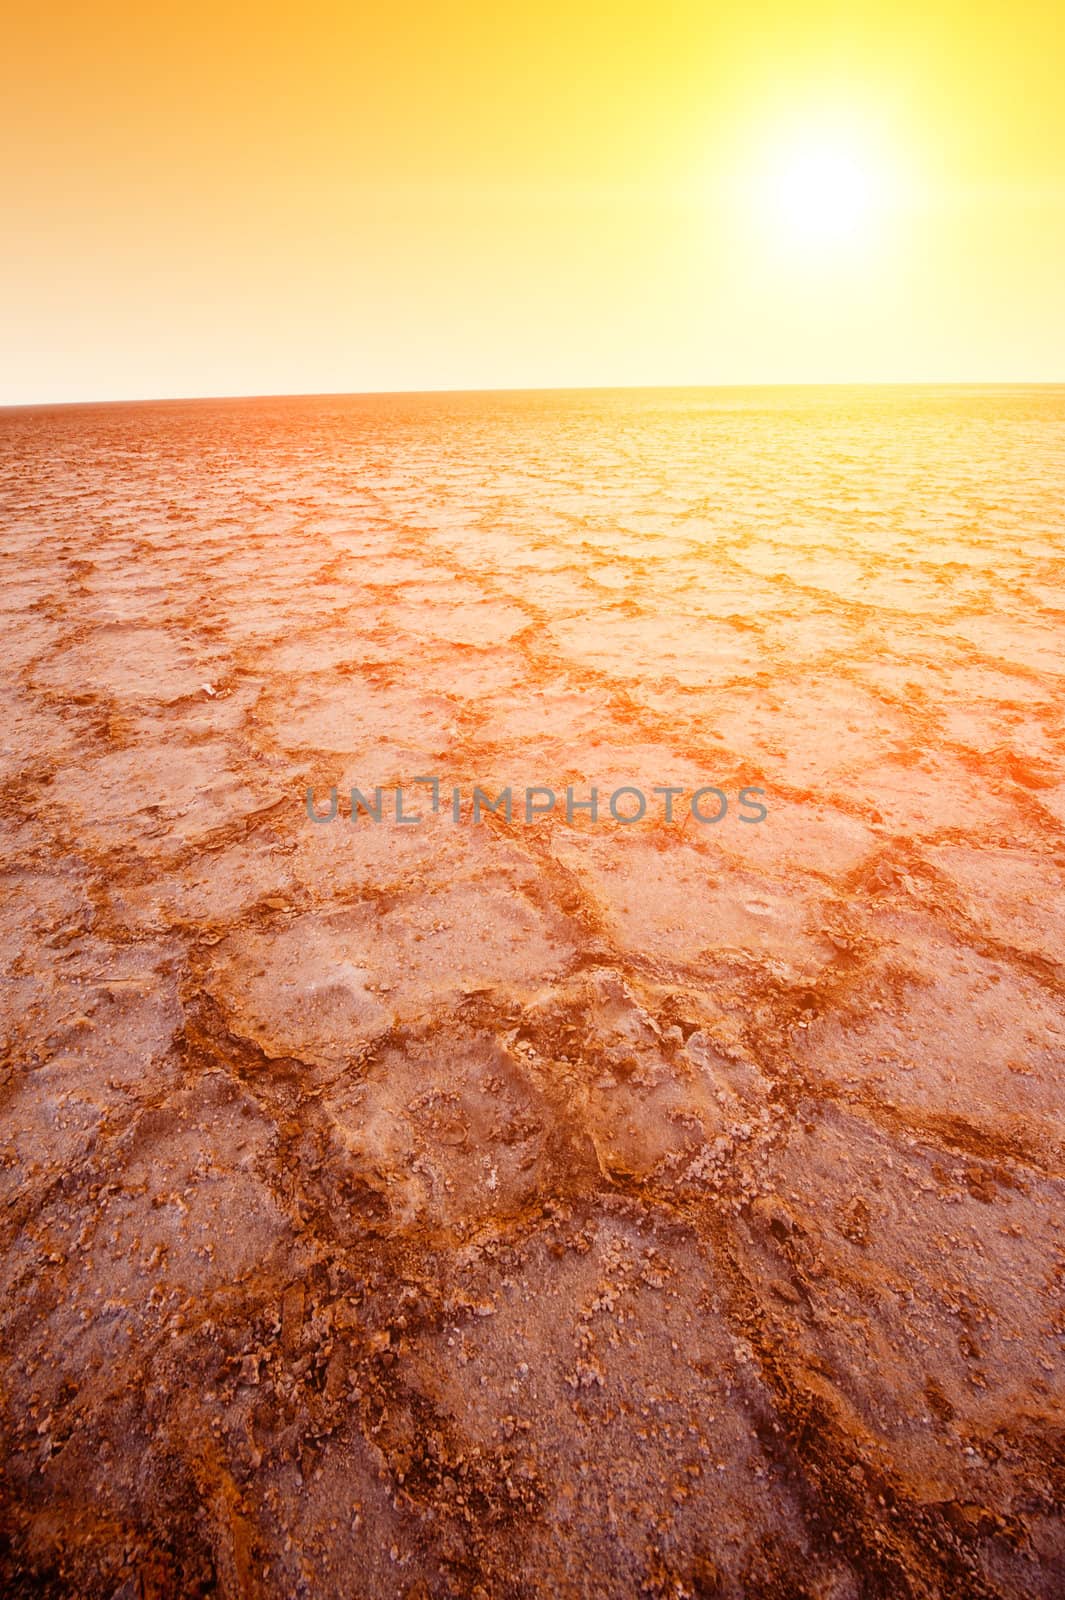 Beautiful dramatic sunrise over great dried-up salt lake Chott el Djerid in Tunisia